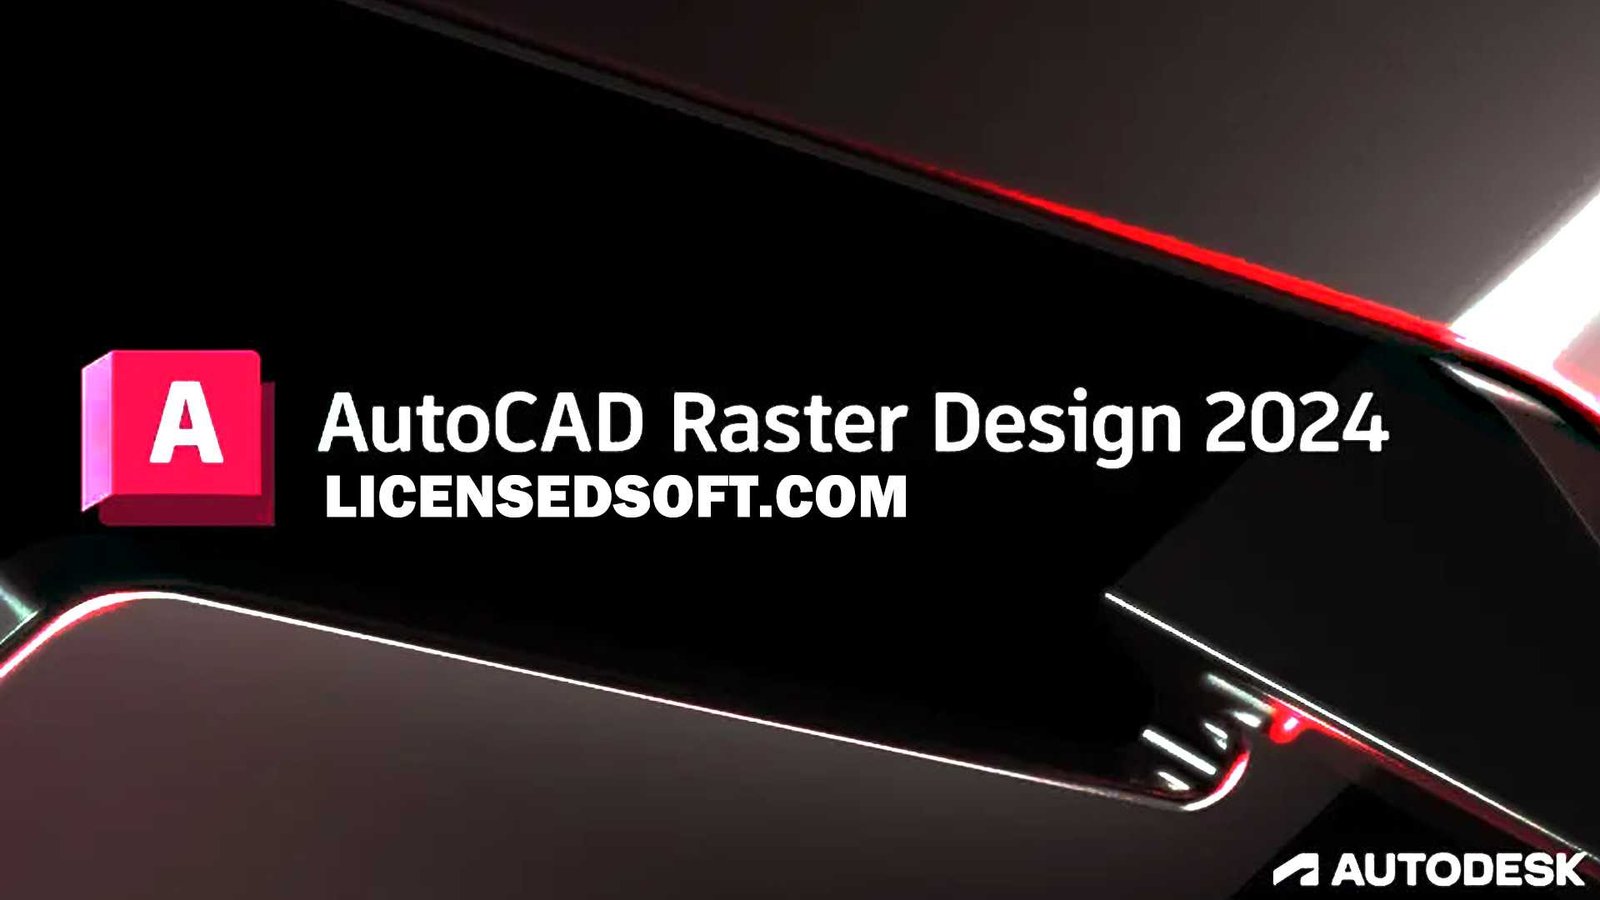 Autodesk AutoCAD Raster Design 2024 Cover By LicensedSoft